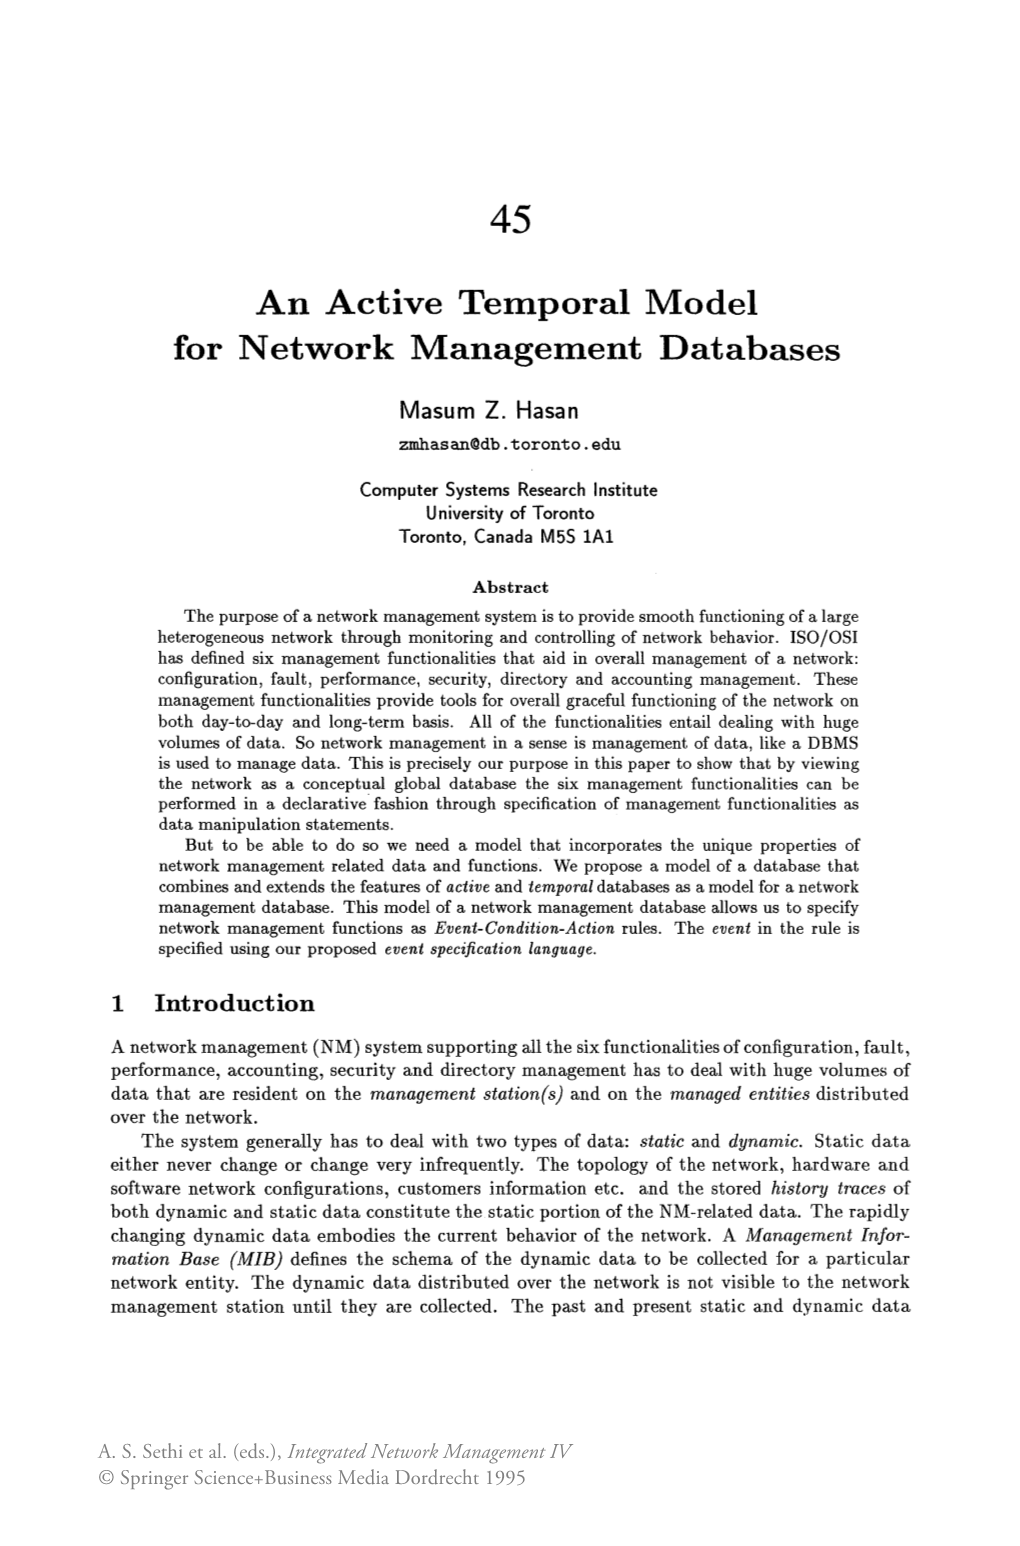 An Active Temporal Model for Network Management Databases